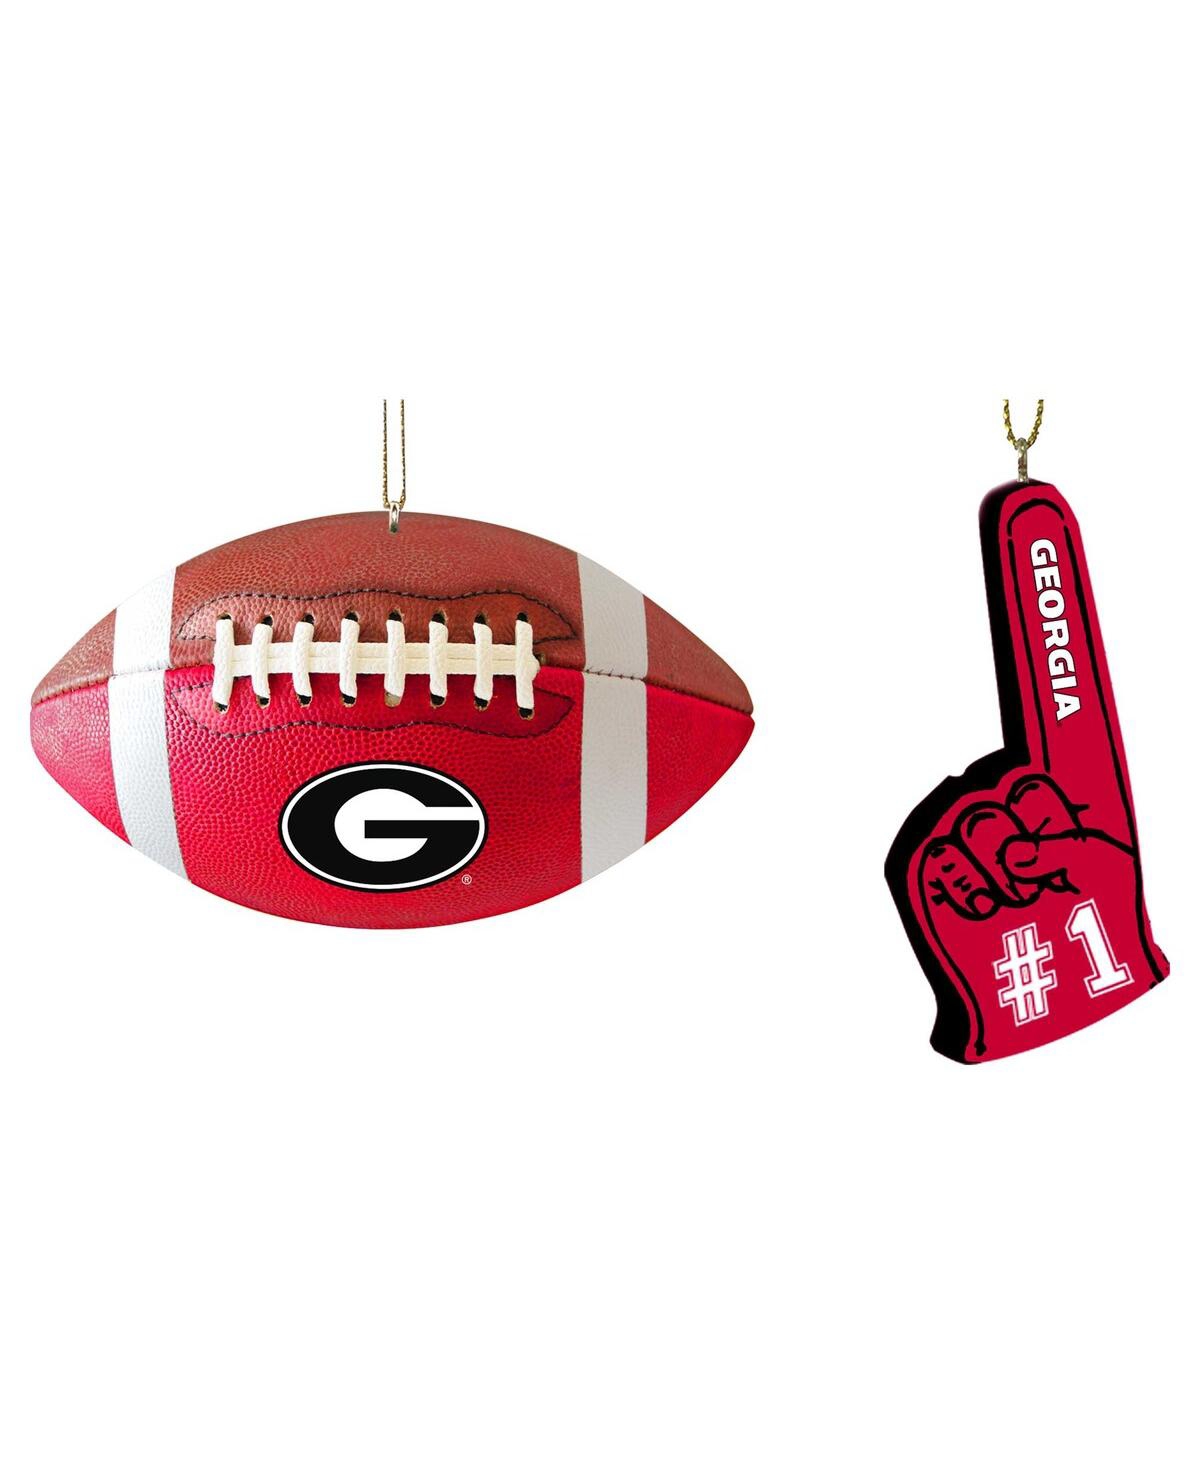 The Memory Company Georgia Bulldogs Football and Foam Finger Ornament Two-Pack - Multi